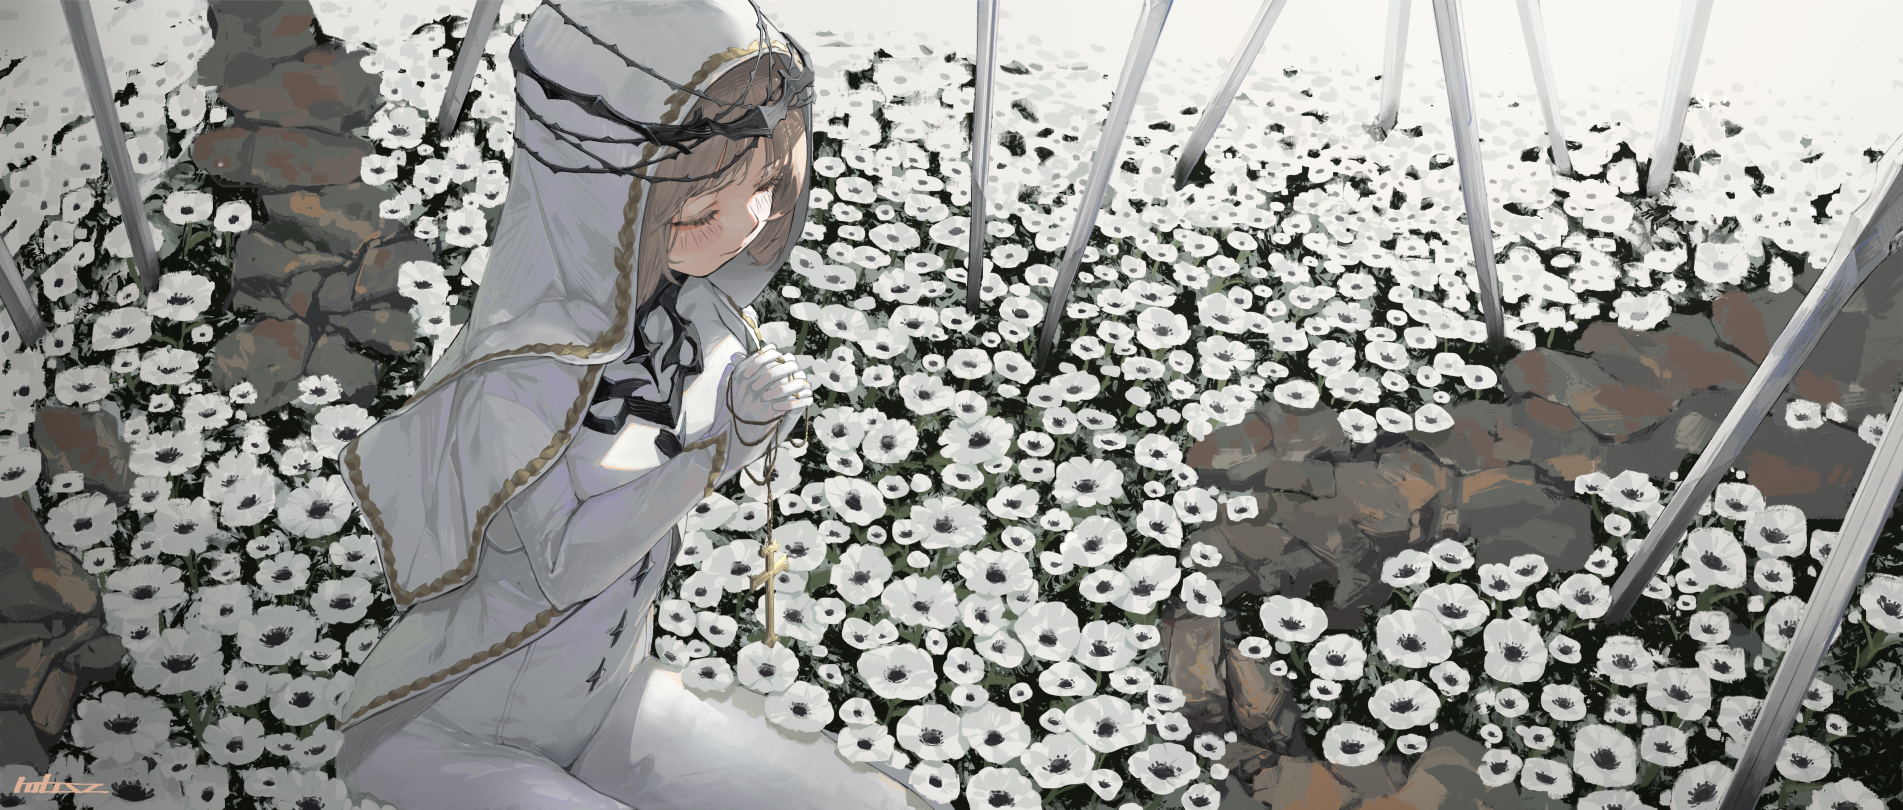 Anime 1903x810 anime anime girls flowers closed eyes nuns nun outfit praying cross